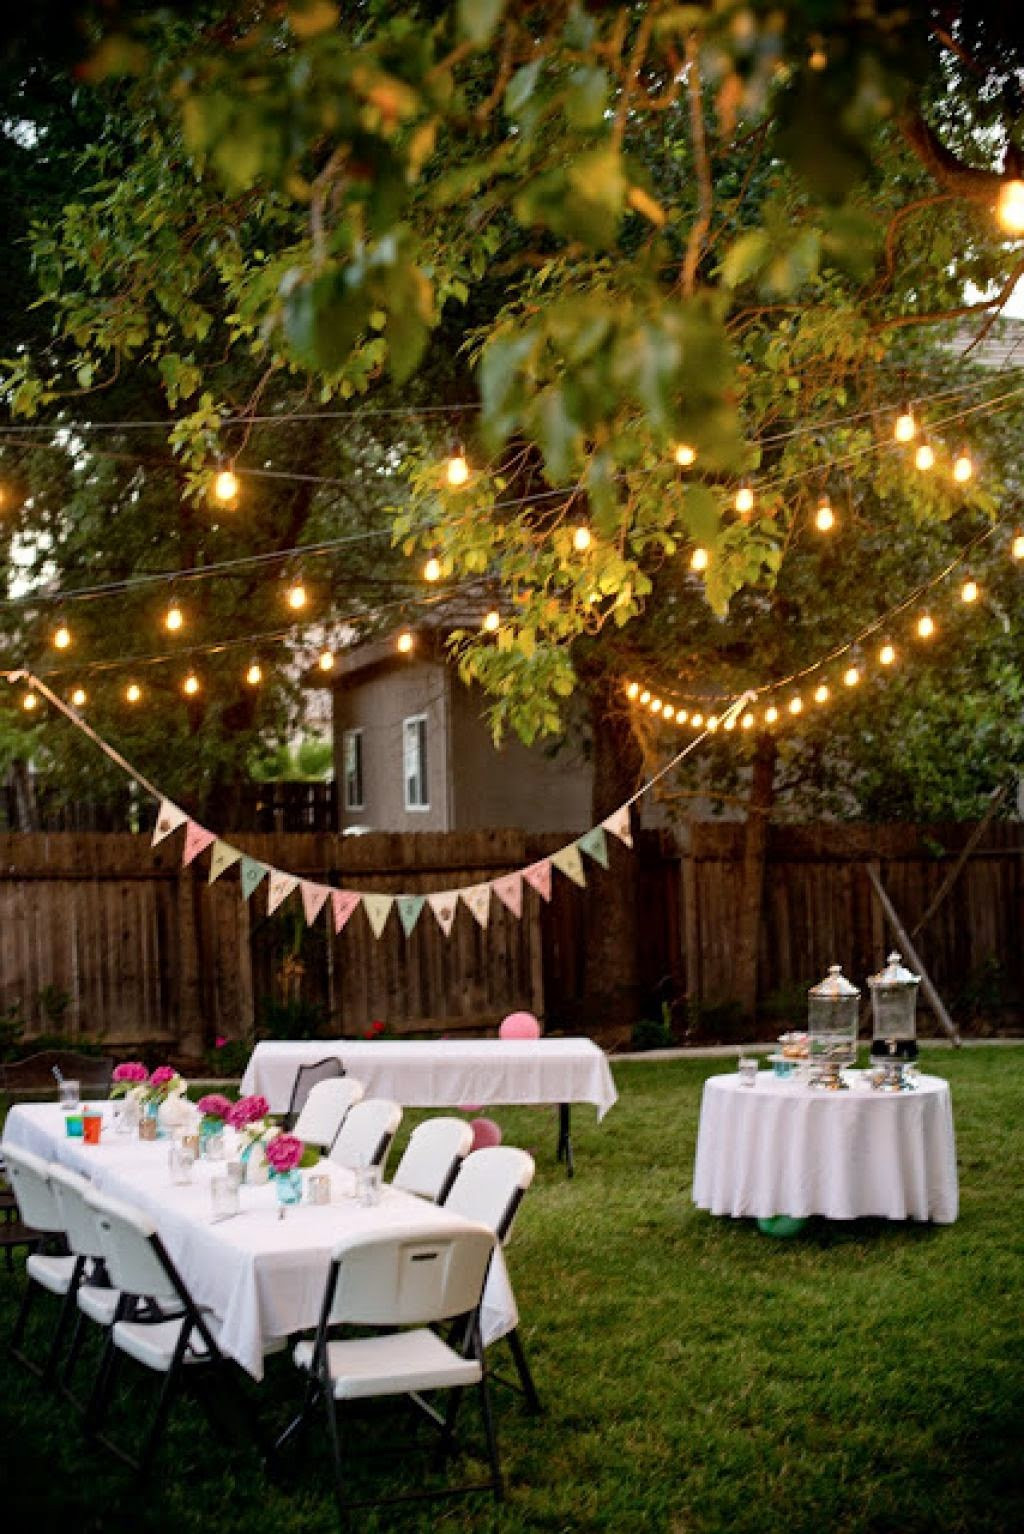 Backyard Party Design Ideas
 Enjoy a year end party in the backyard